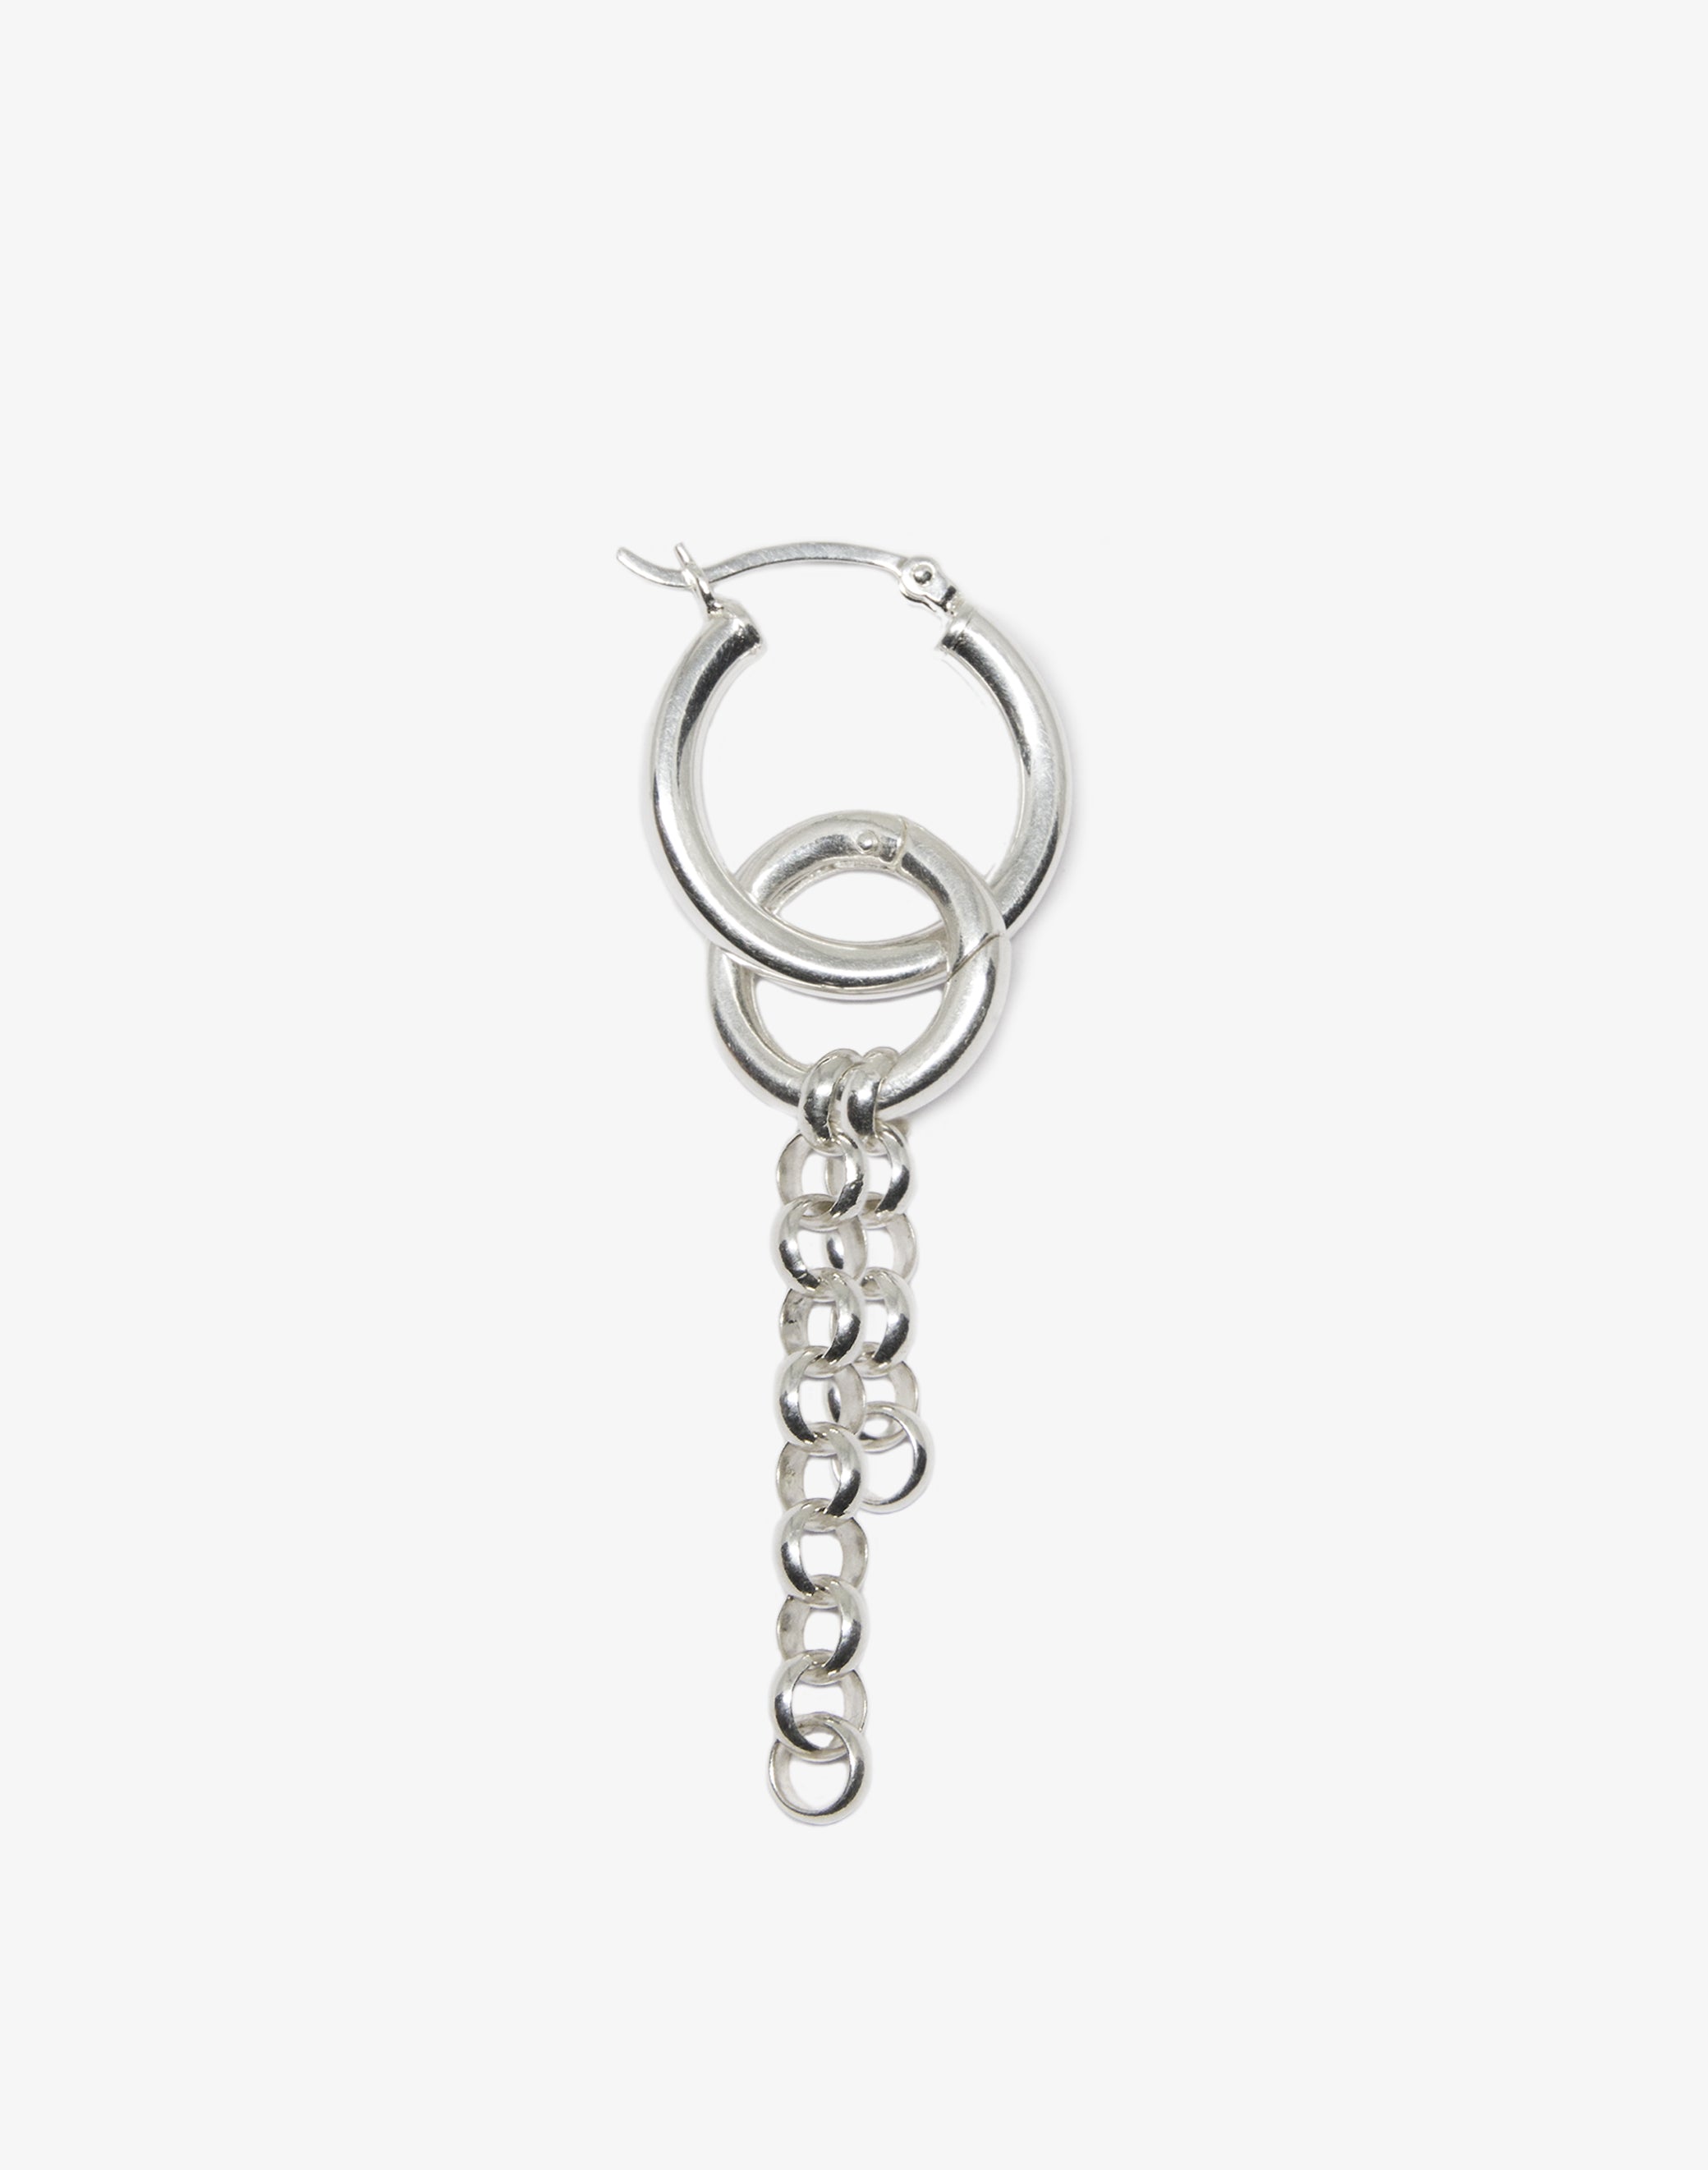 llayers jewelry men unisex silver chain hoops earrings jewelry minimal - Made in Brooklyn New York 1